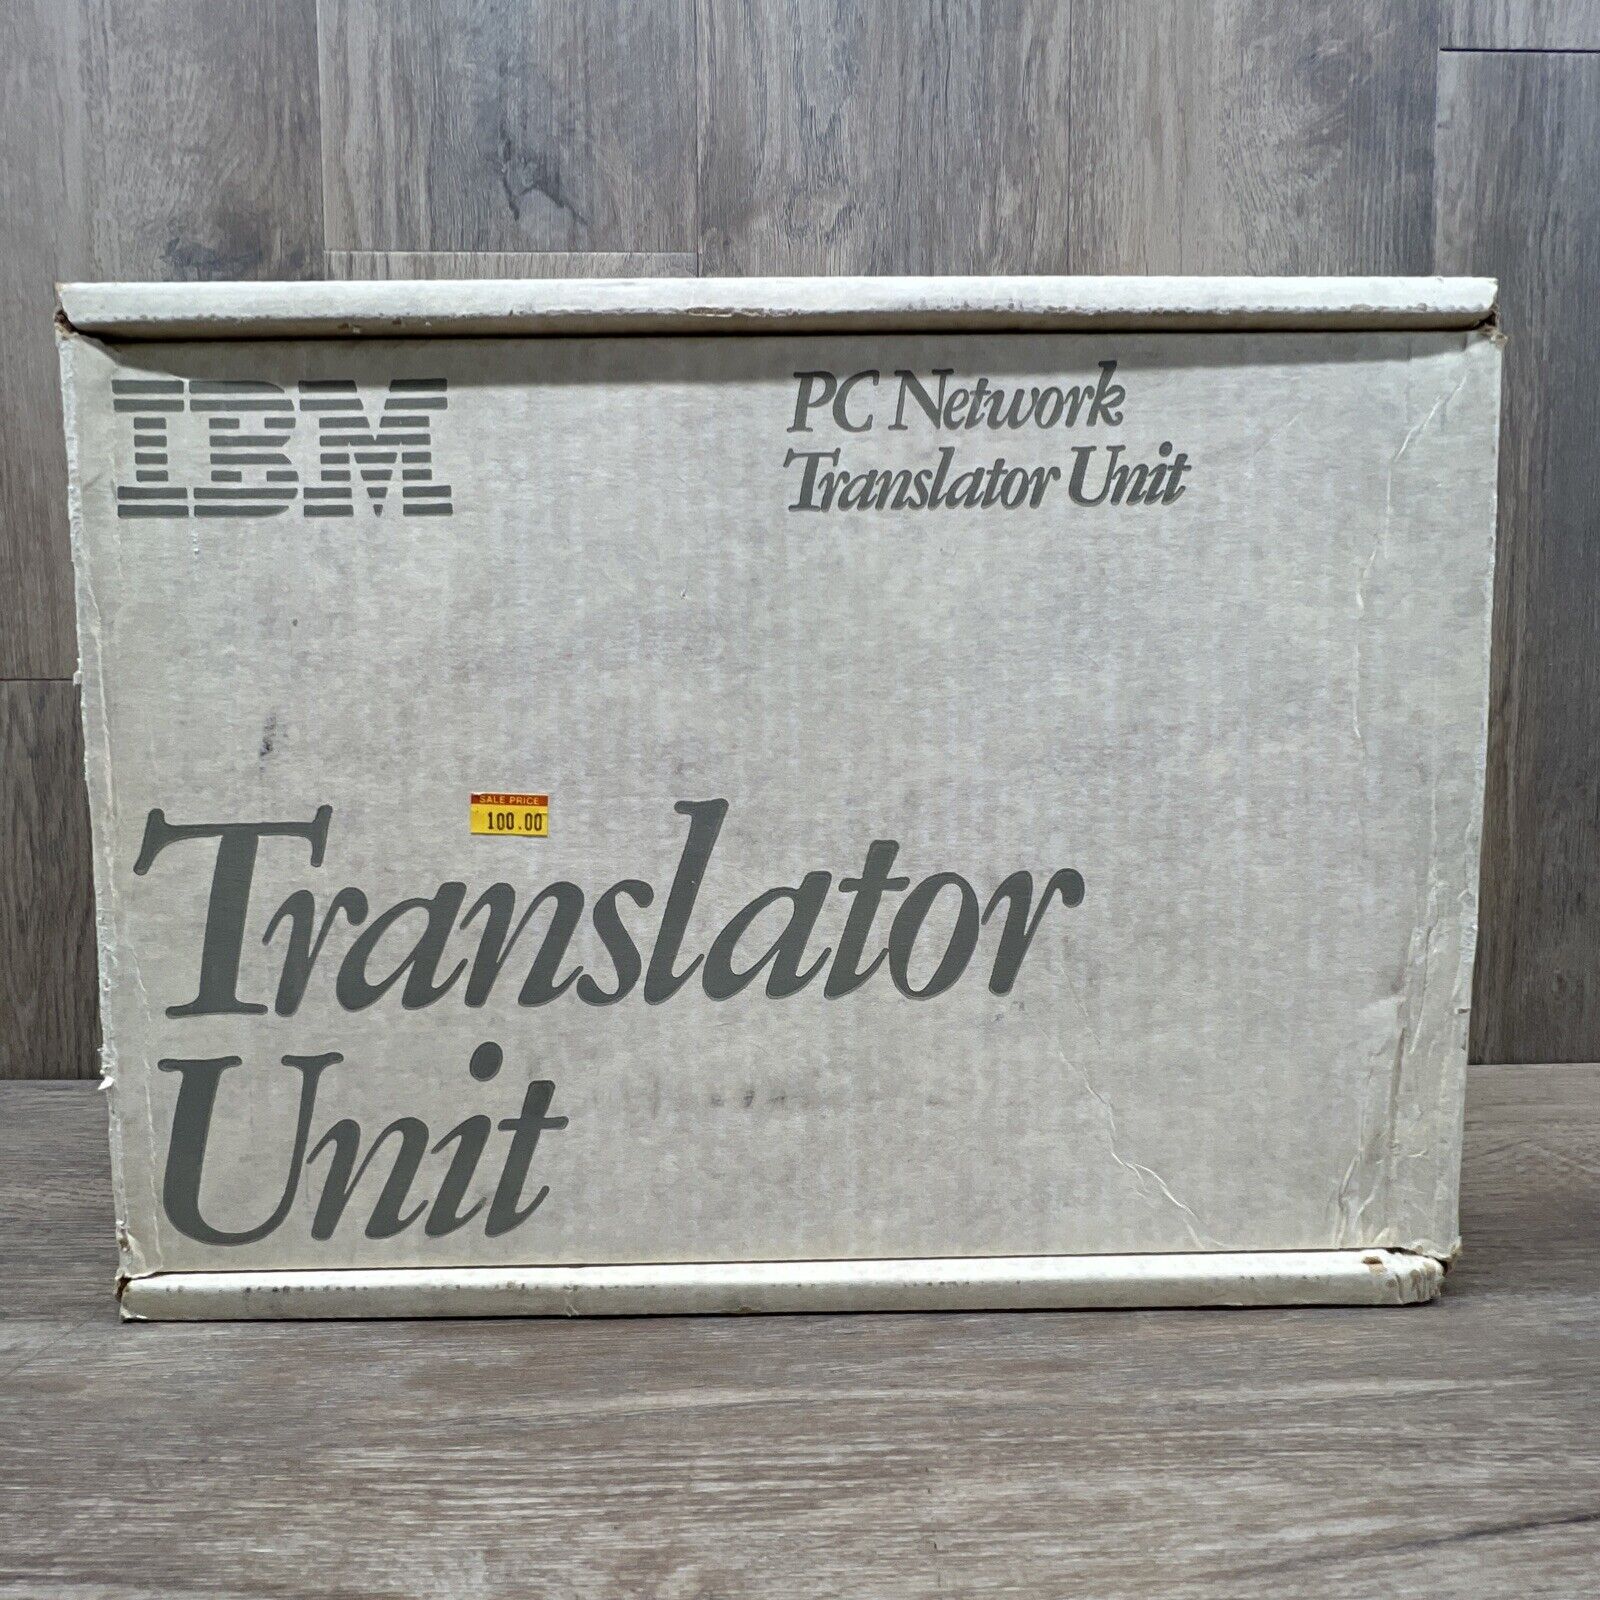 Vintage IBM PC Network Translator Unit Model 5178 New Open Box